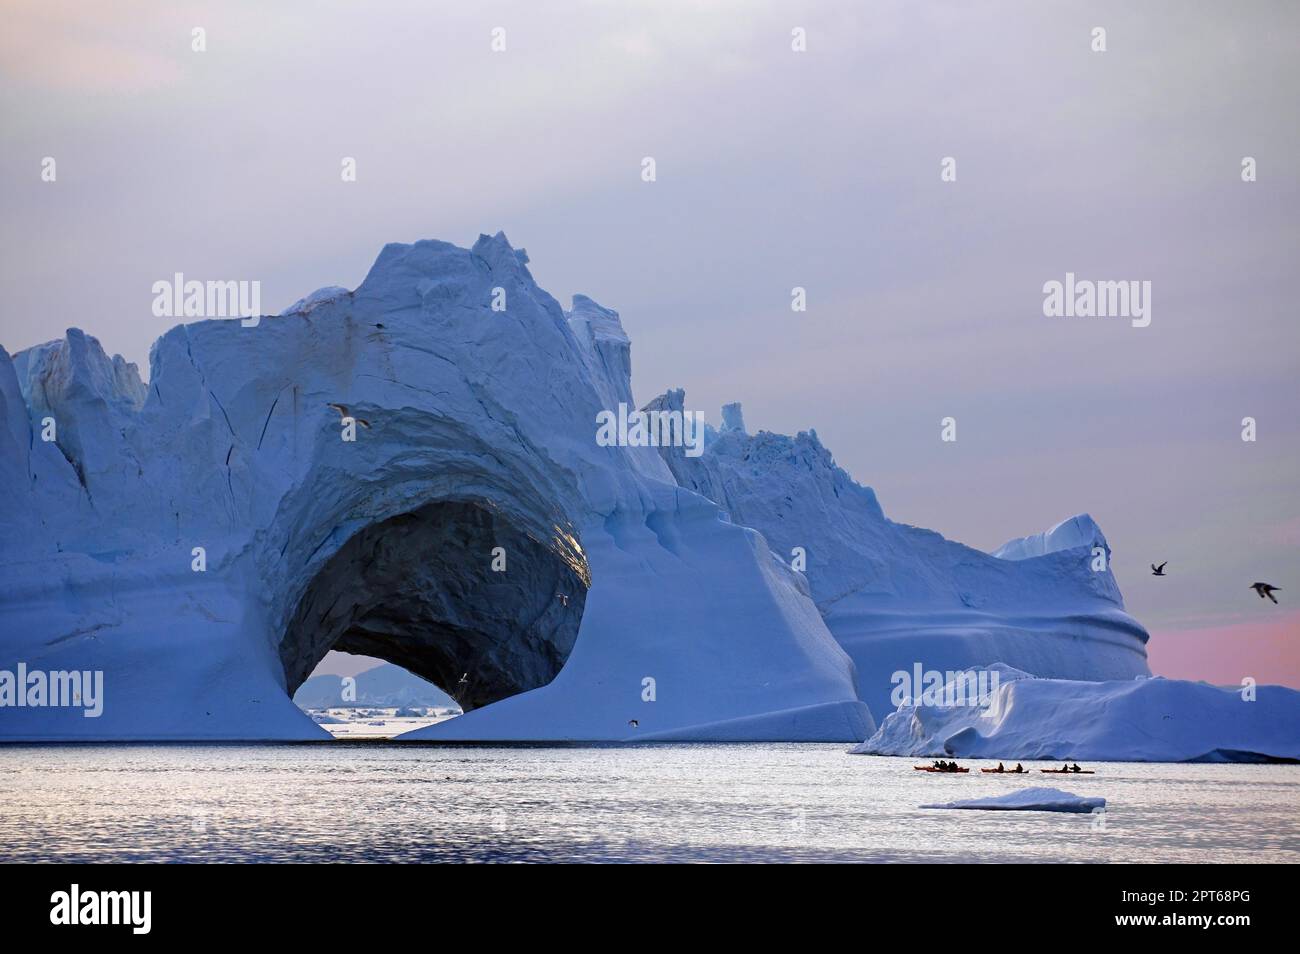 Kajakfahrer vor dem riesigen Eisberg, Eishöhle, Mitternachtssonne, Ilulissat, Disko Bay, Dänemark, Grönland Stockfoto